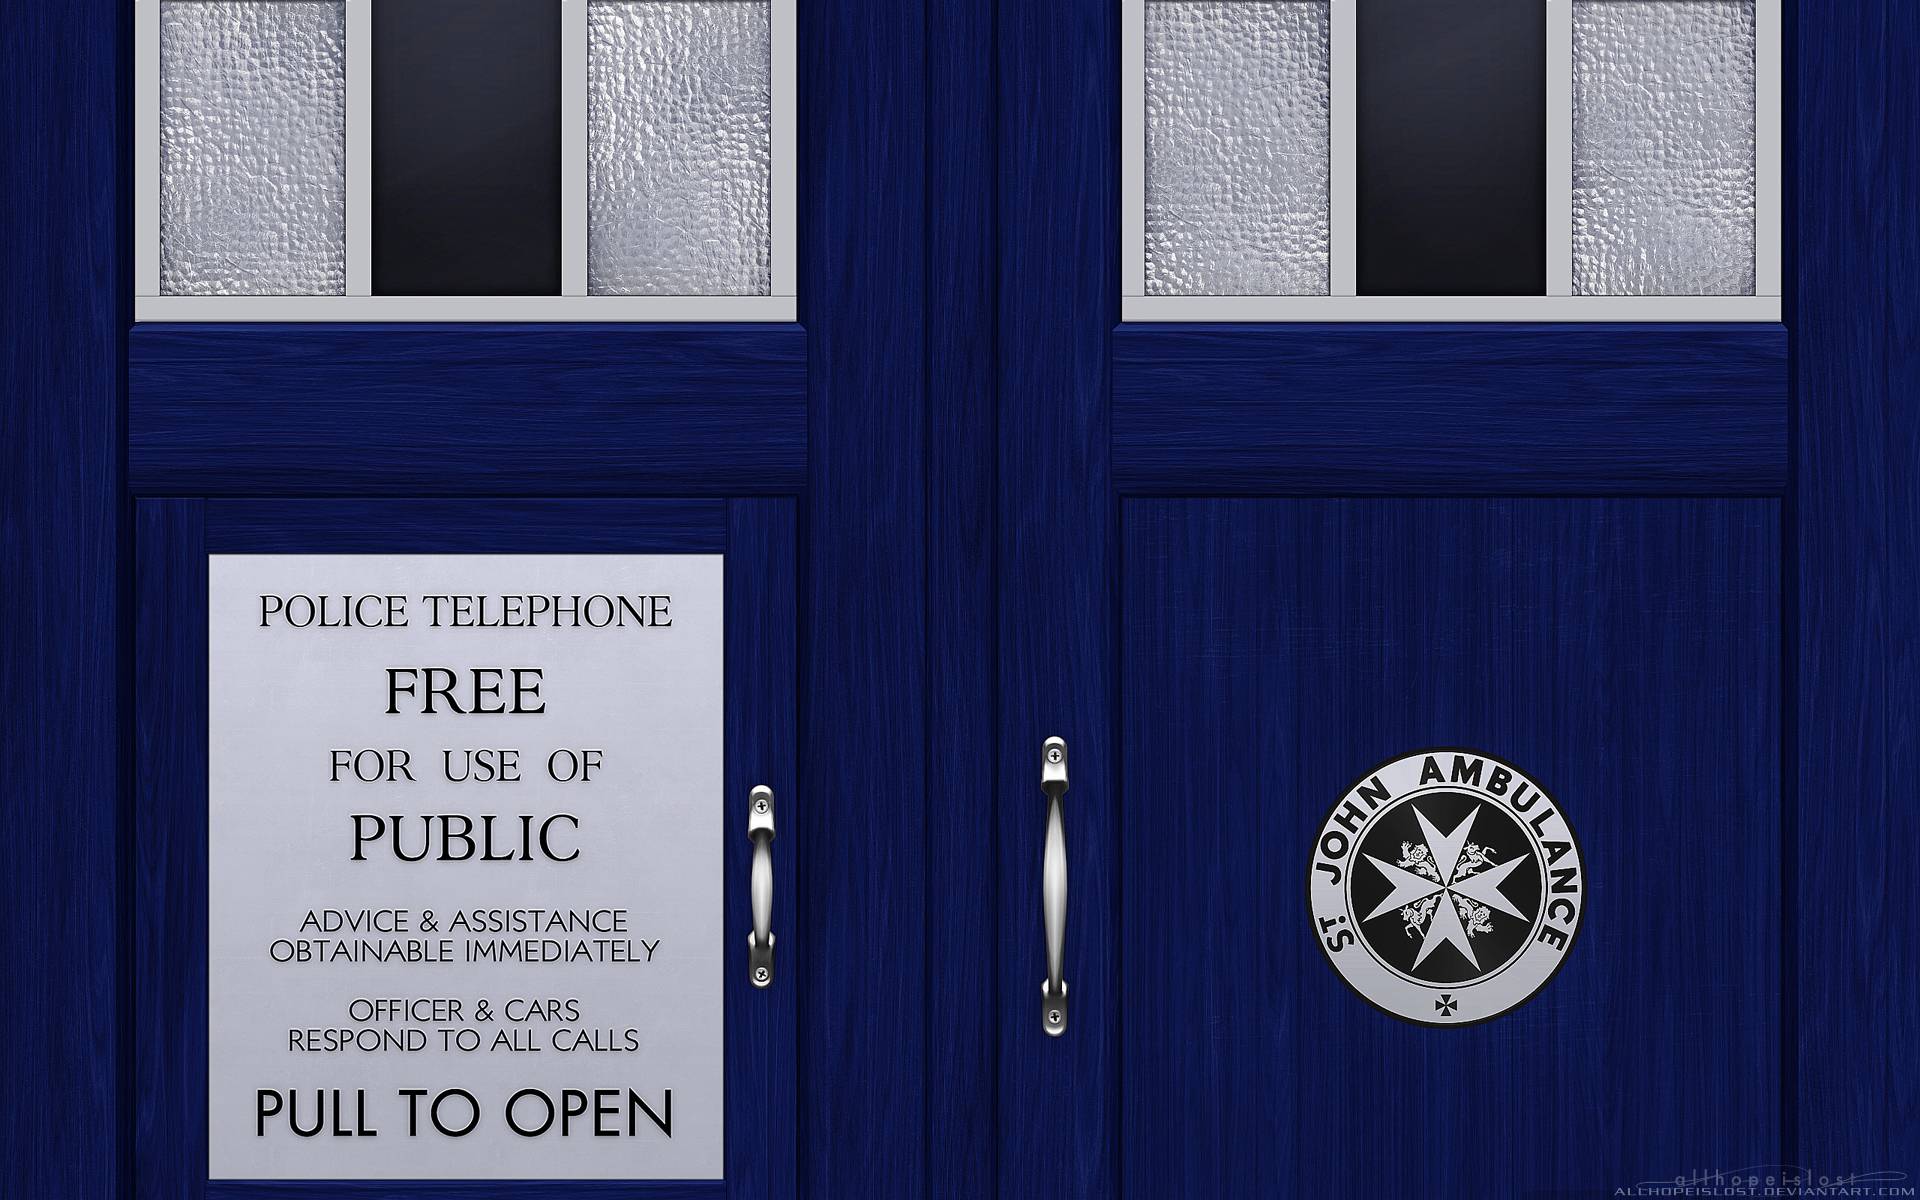 Doctor Who Tardis wallpaper